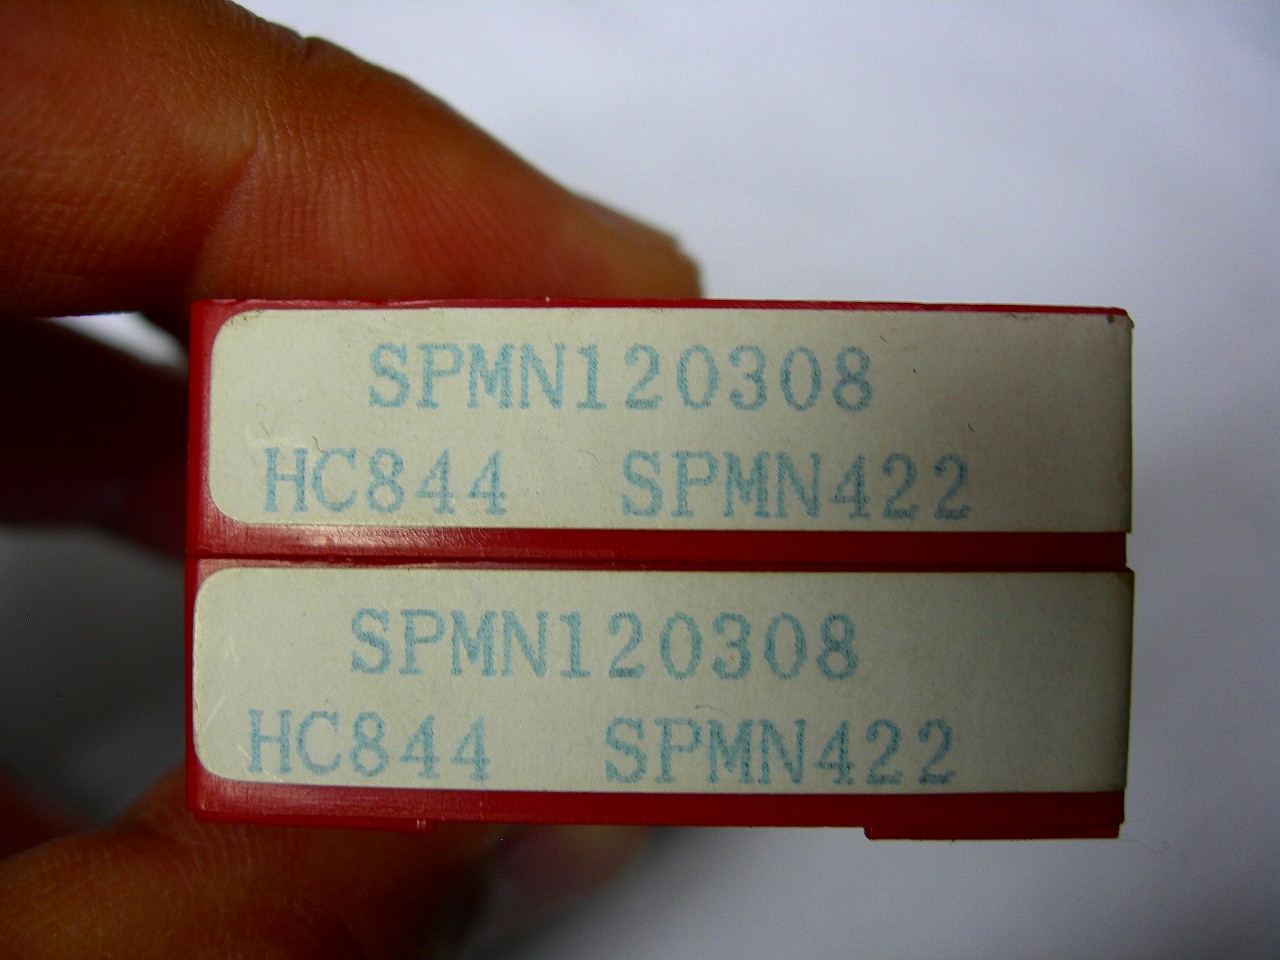 日立　SPMN120308 HC844